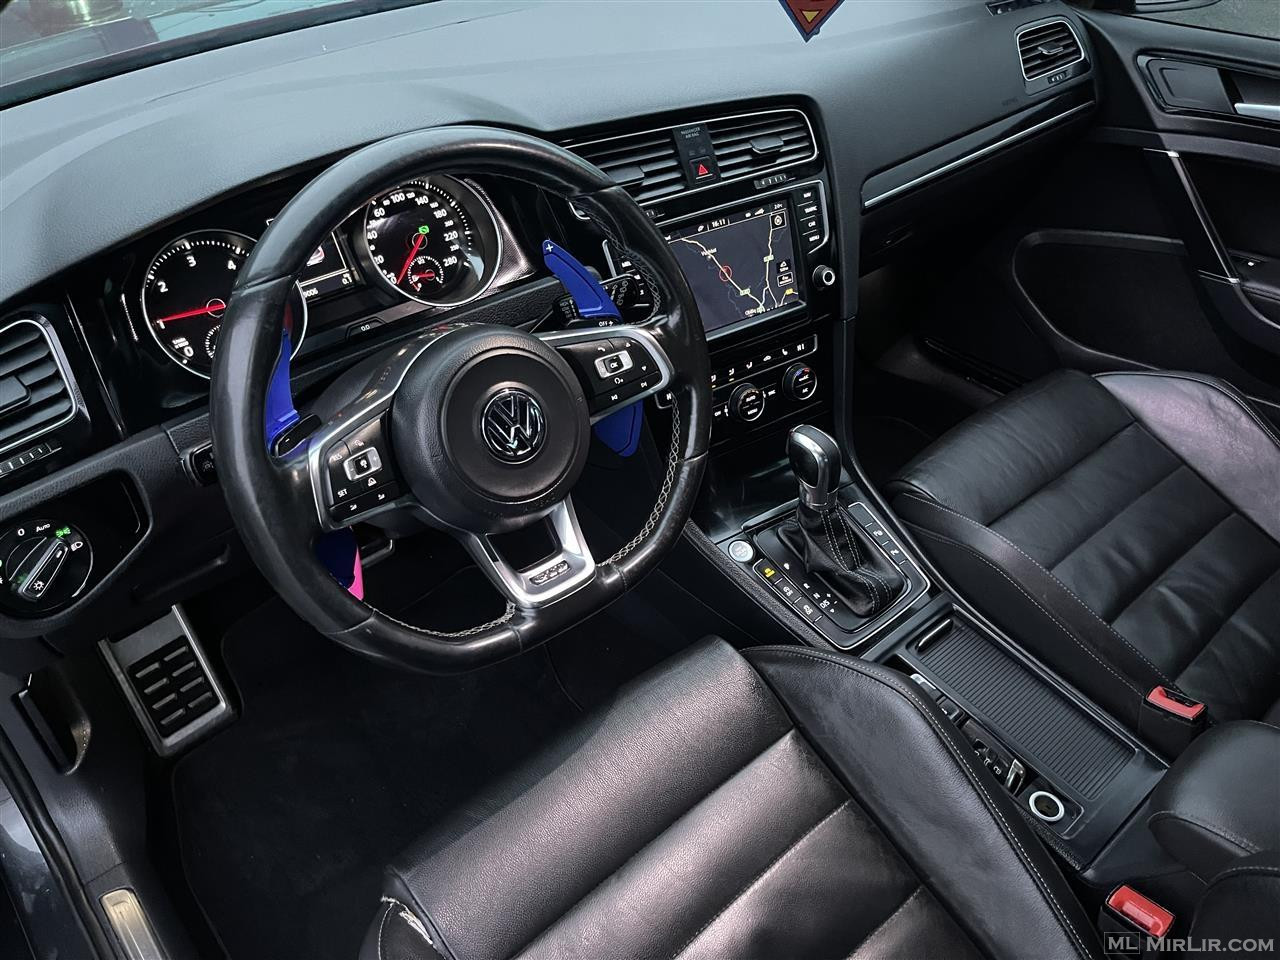 VW GOLF 7 GTD 2.0 DSG SOUND SYSTEM 2016 184 PS +STAGE 1+